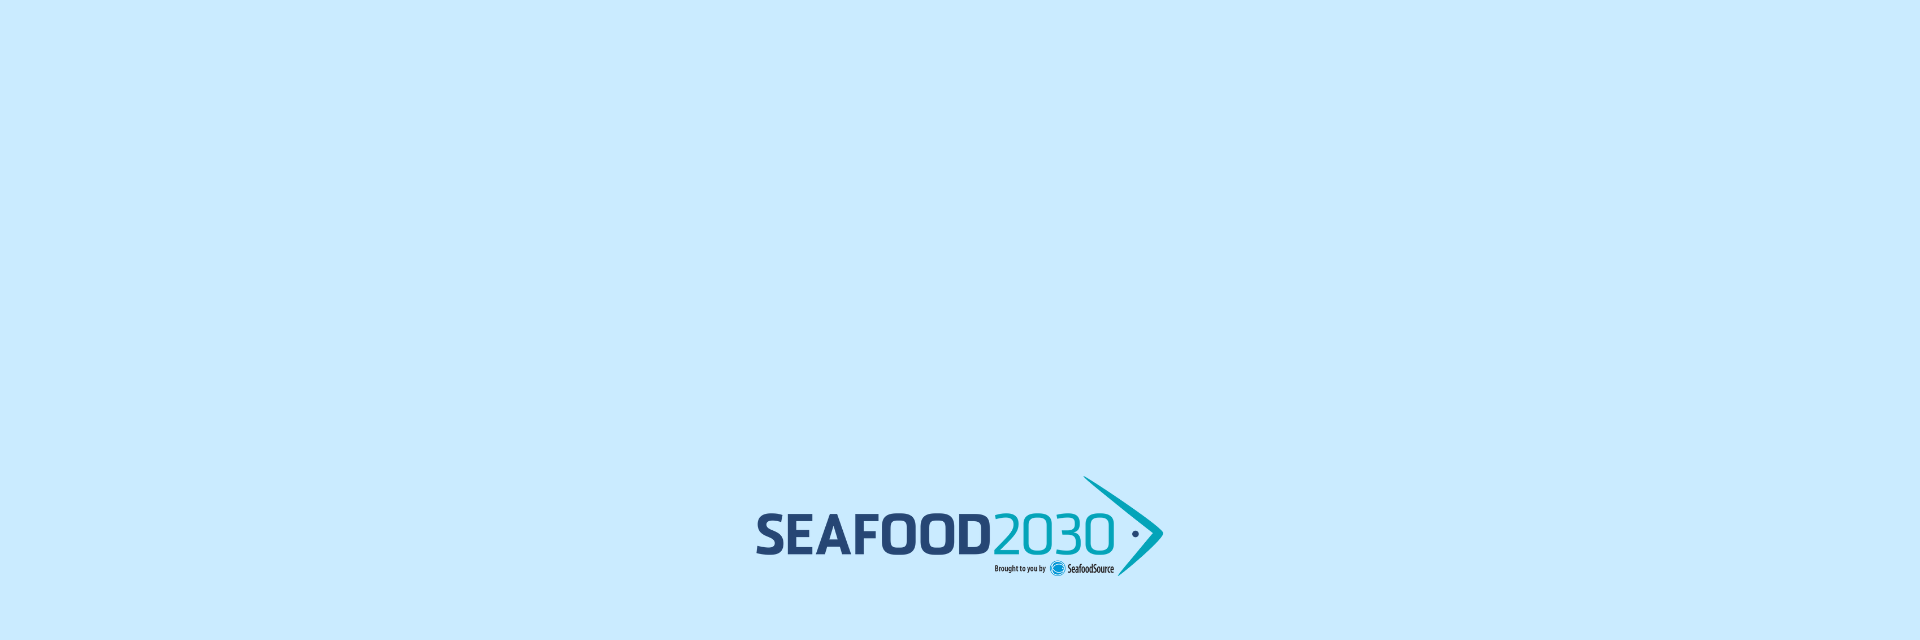 Seafood2030 int